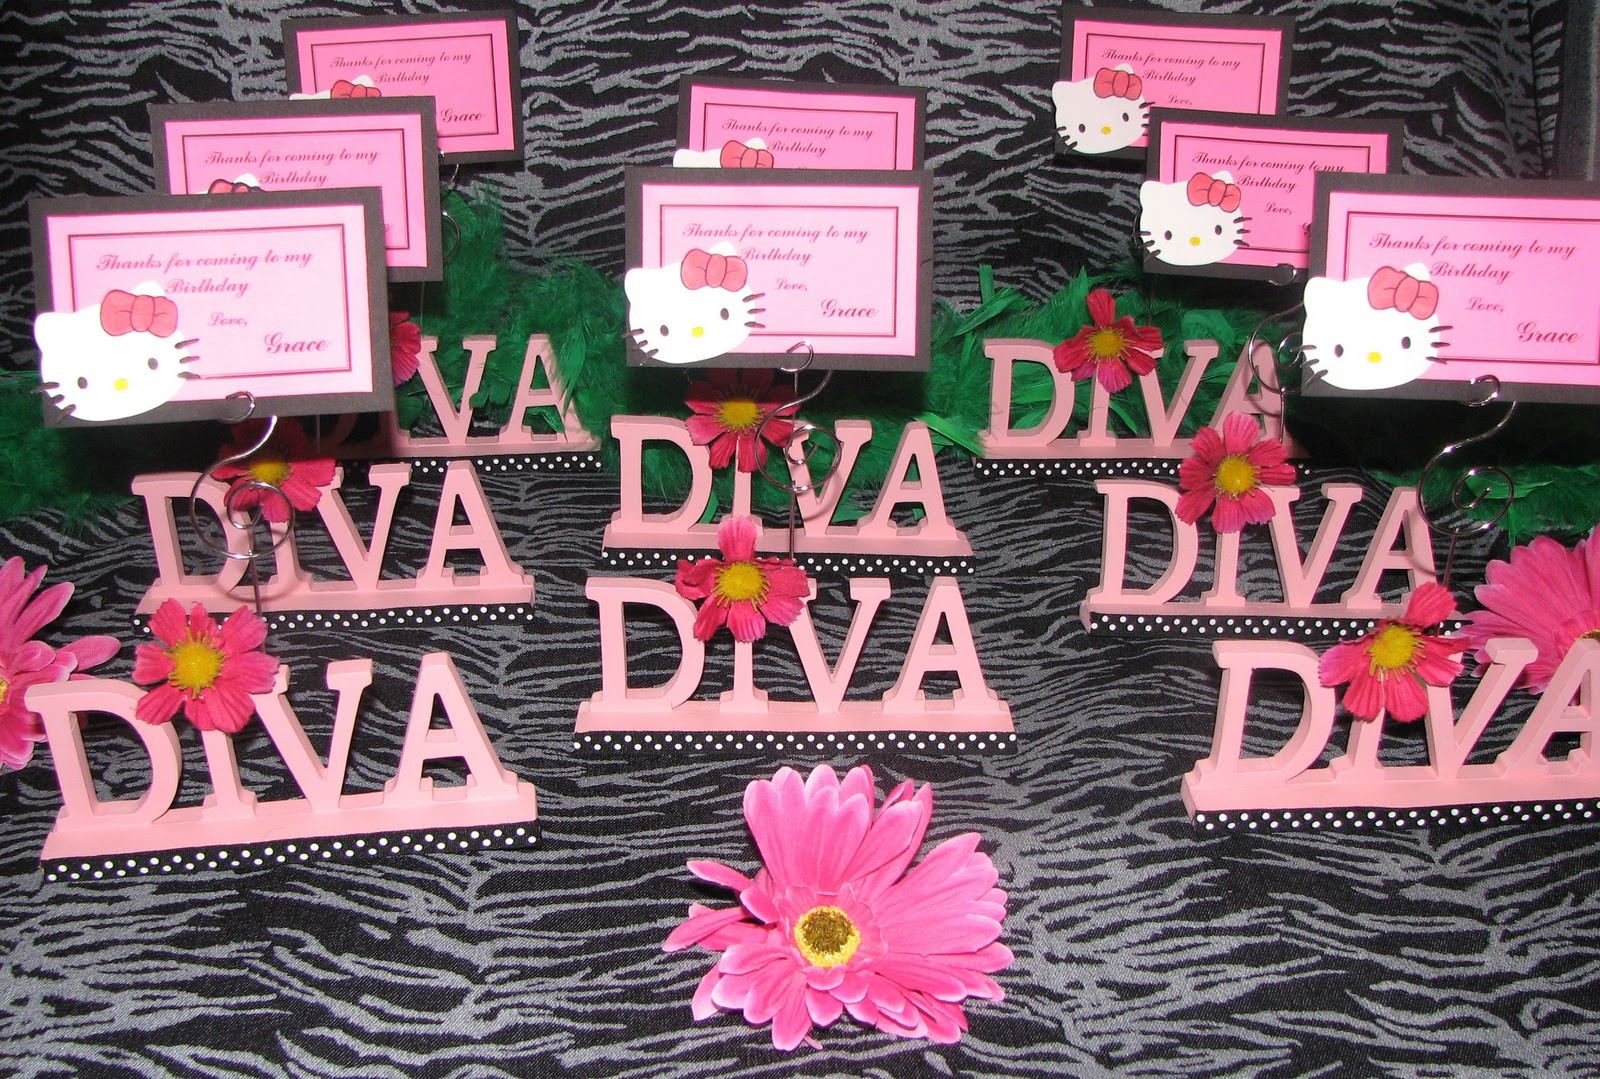 Diva Birthday Party Decorations
 Utopia Party Decor Diva Party Decor Decoracion Fiesta Diva